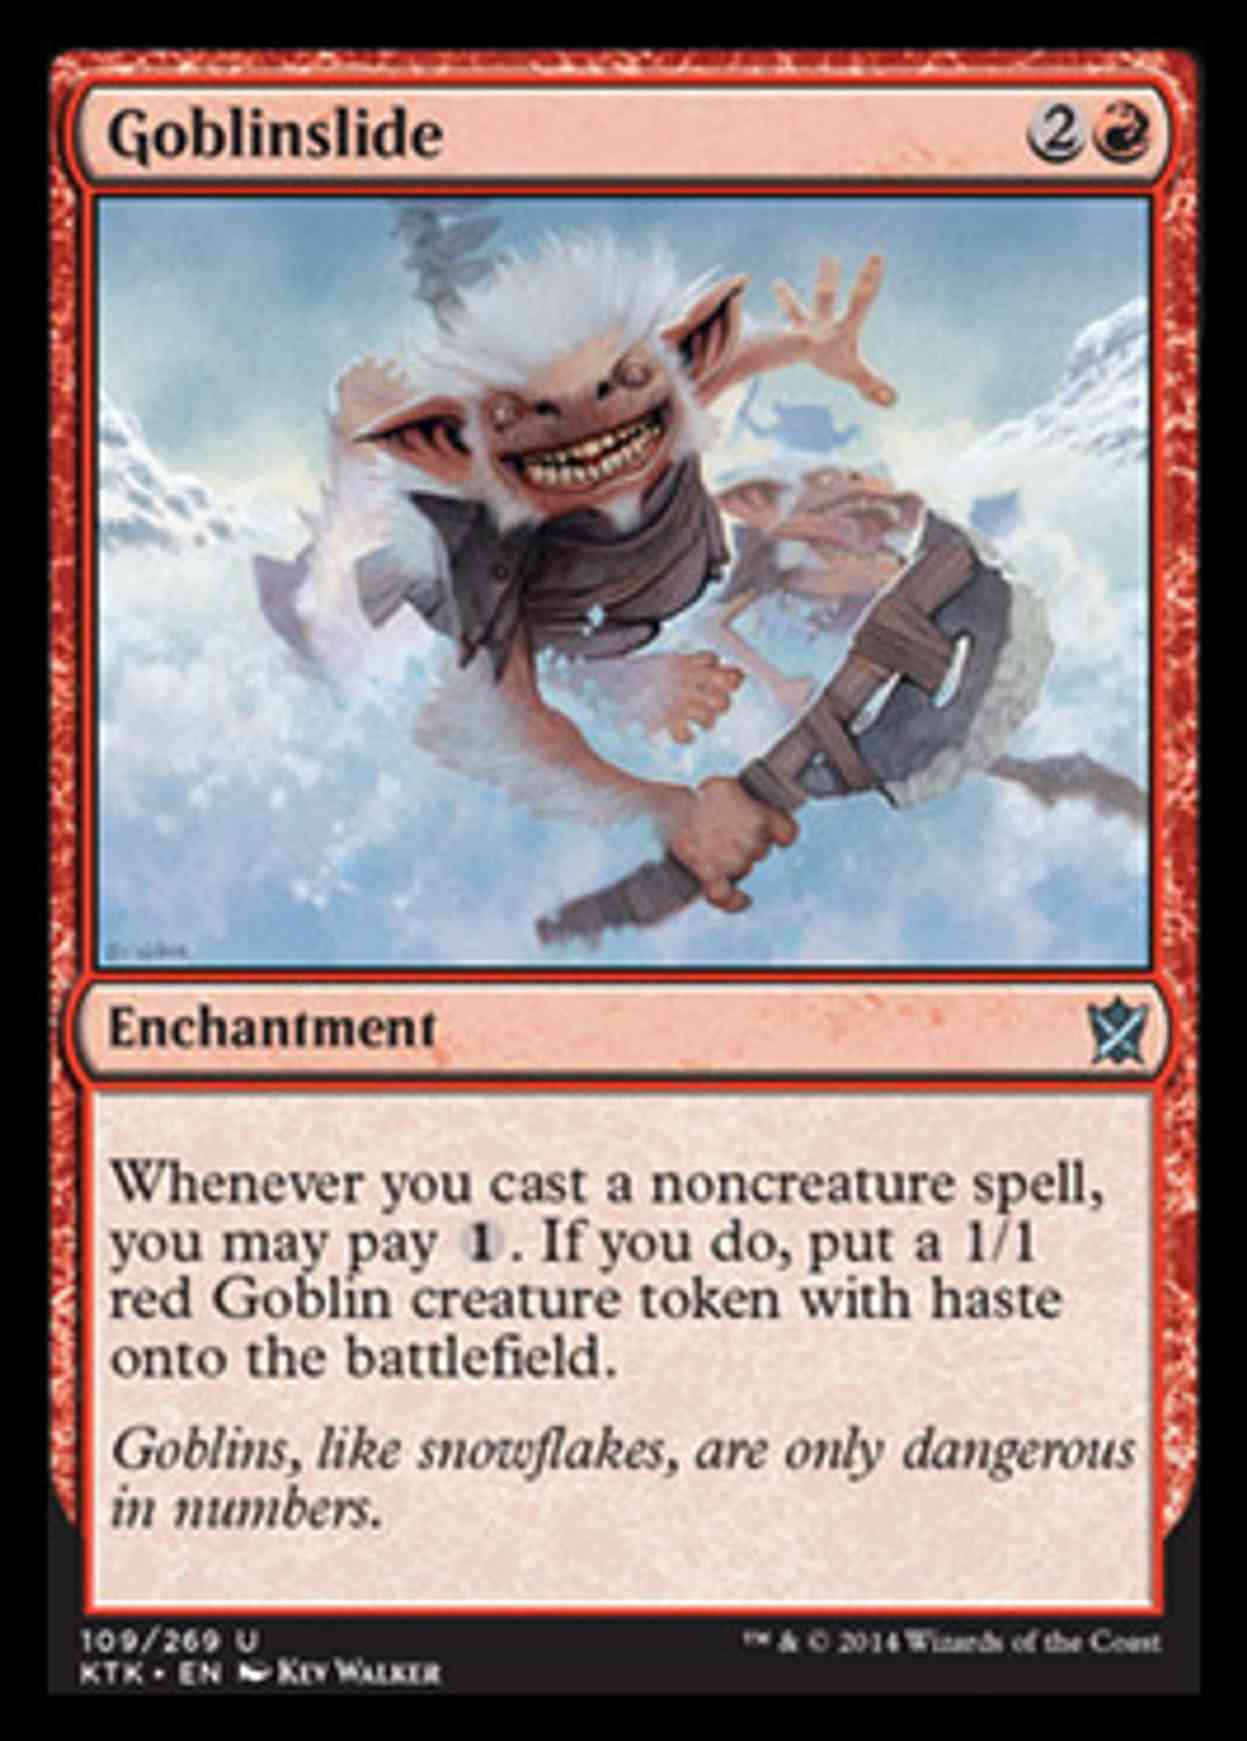 Goblinslide magic card front